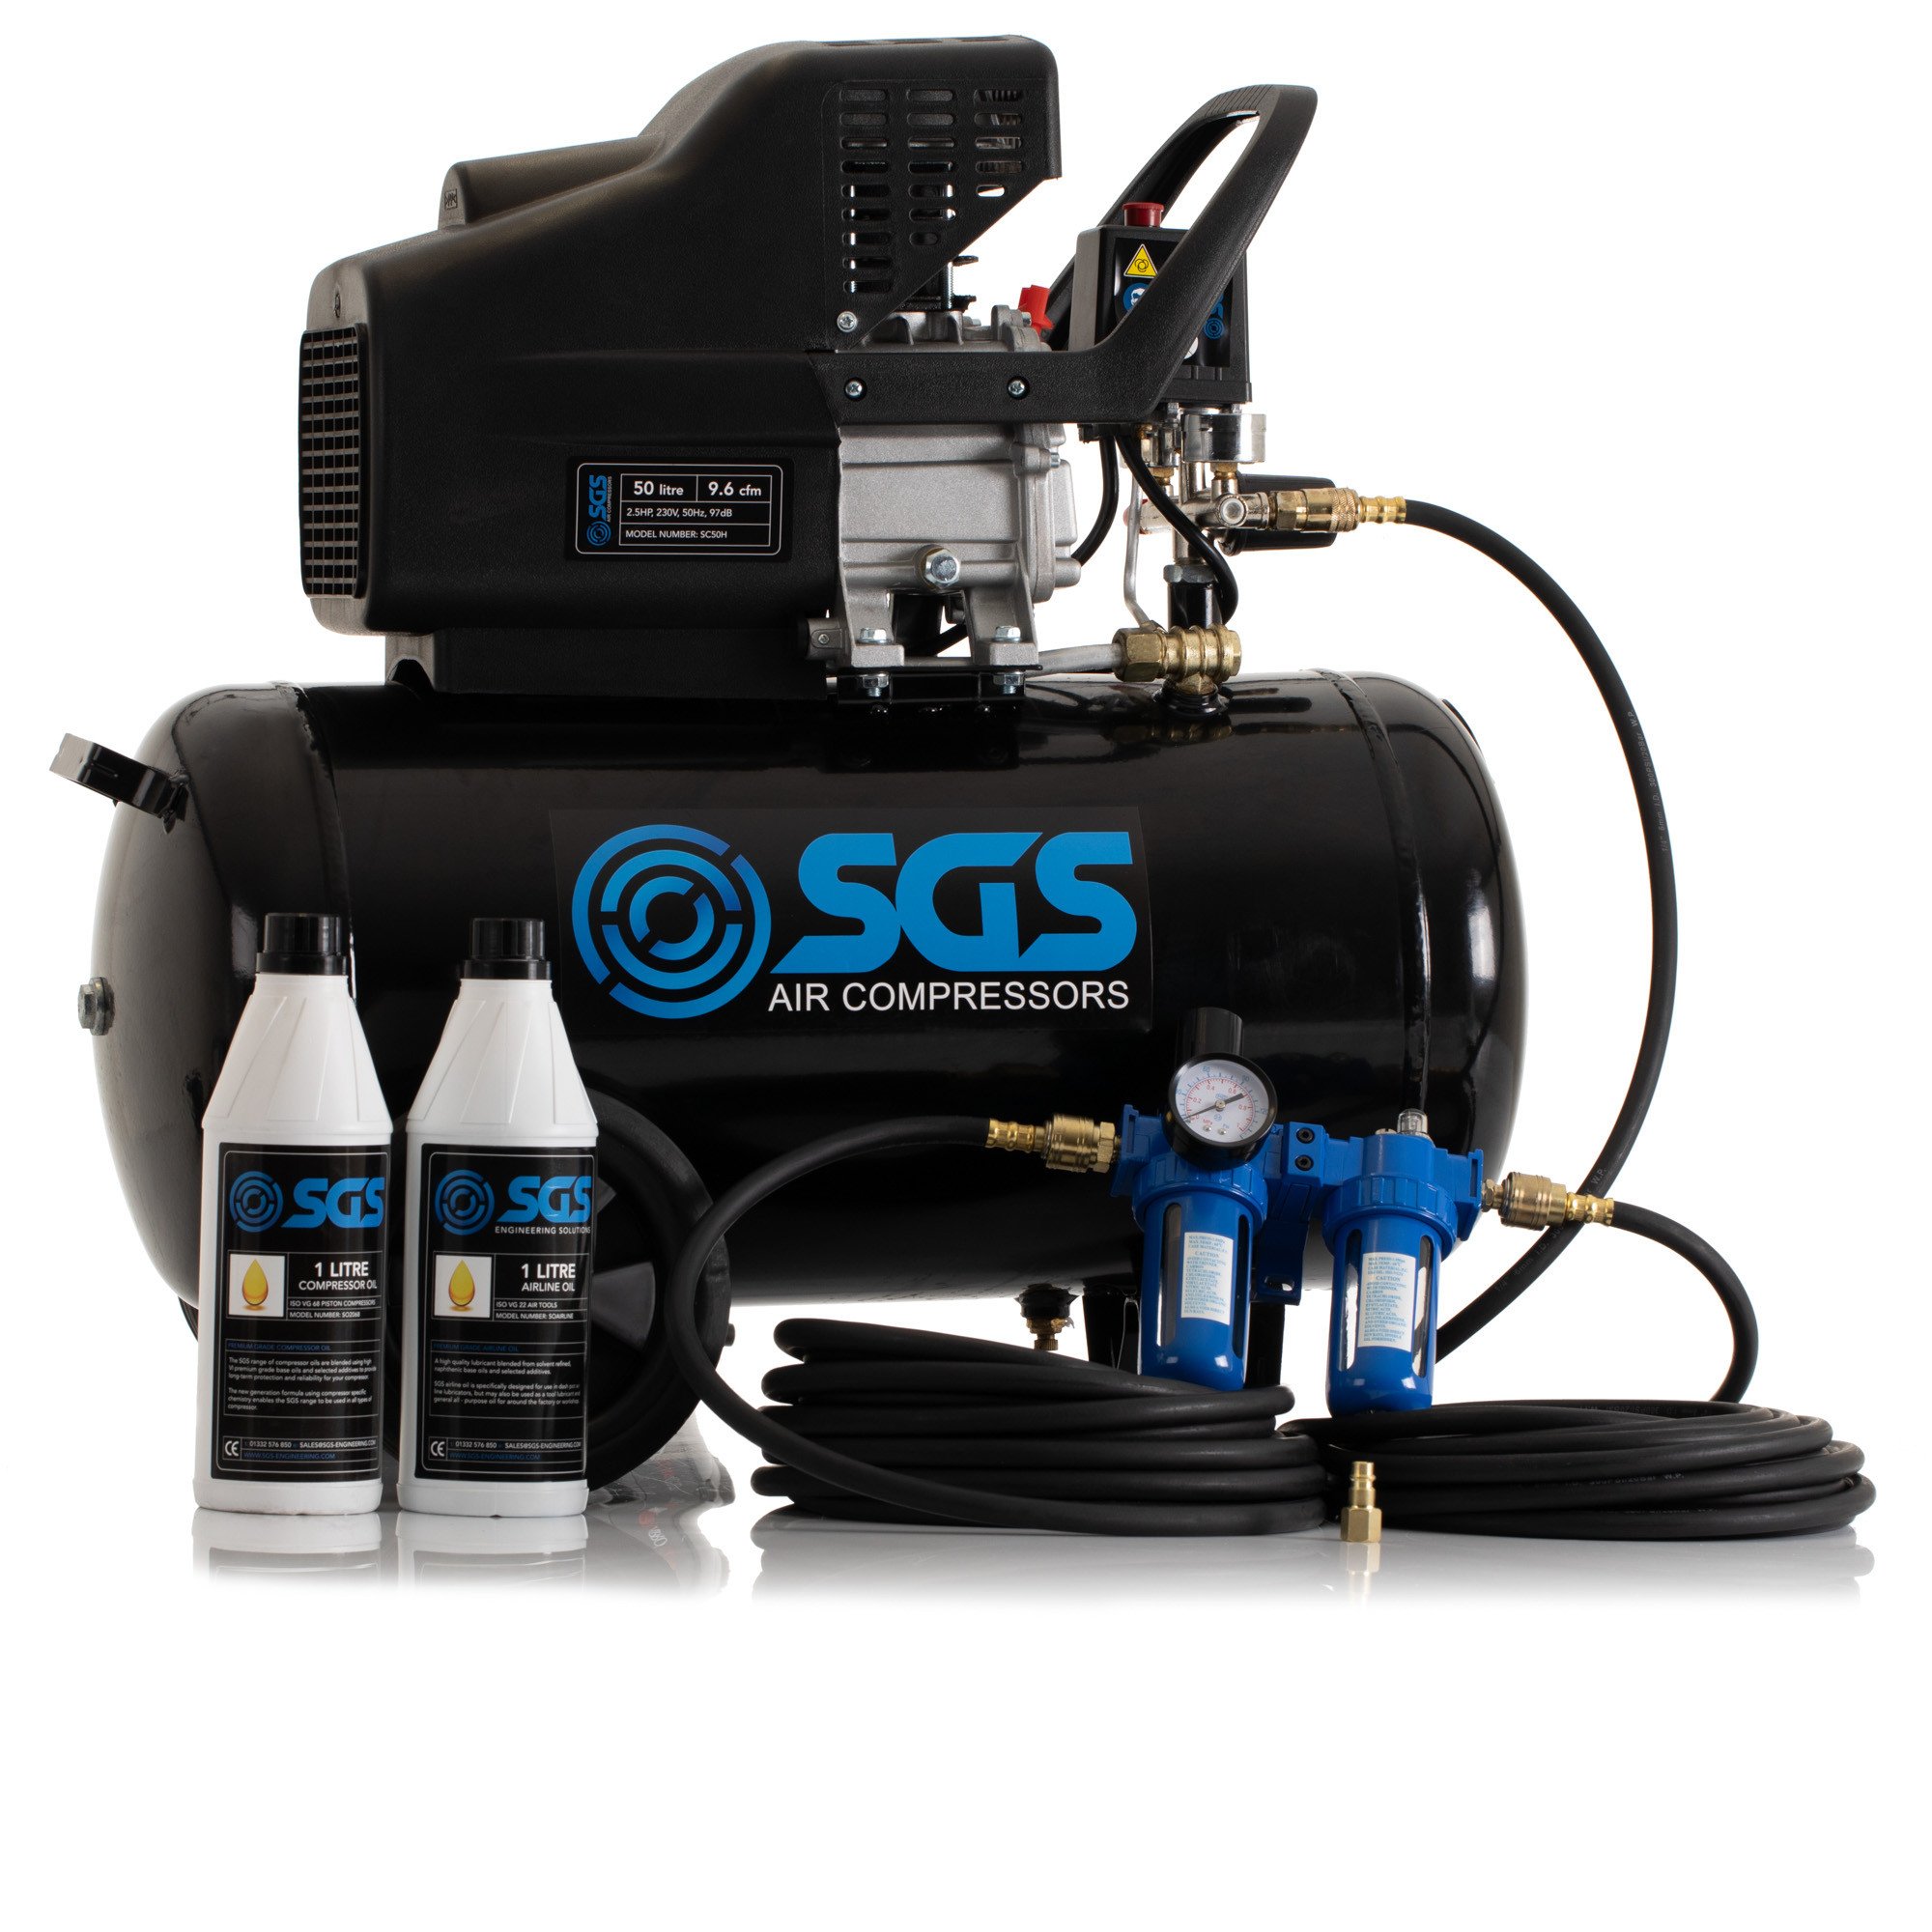 SGS 50升直接驱动空气压缩机和启动器套件- 9.6CFM 2.5HP 50L